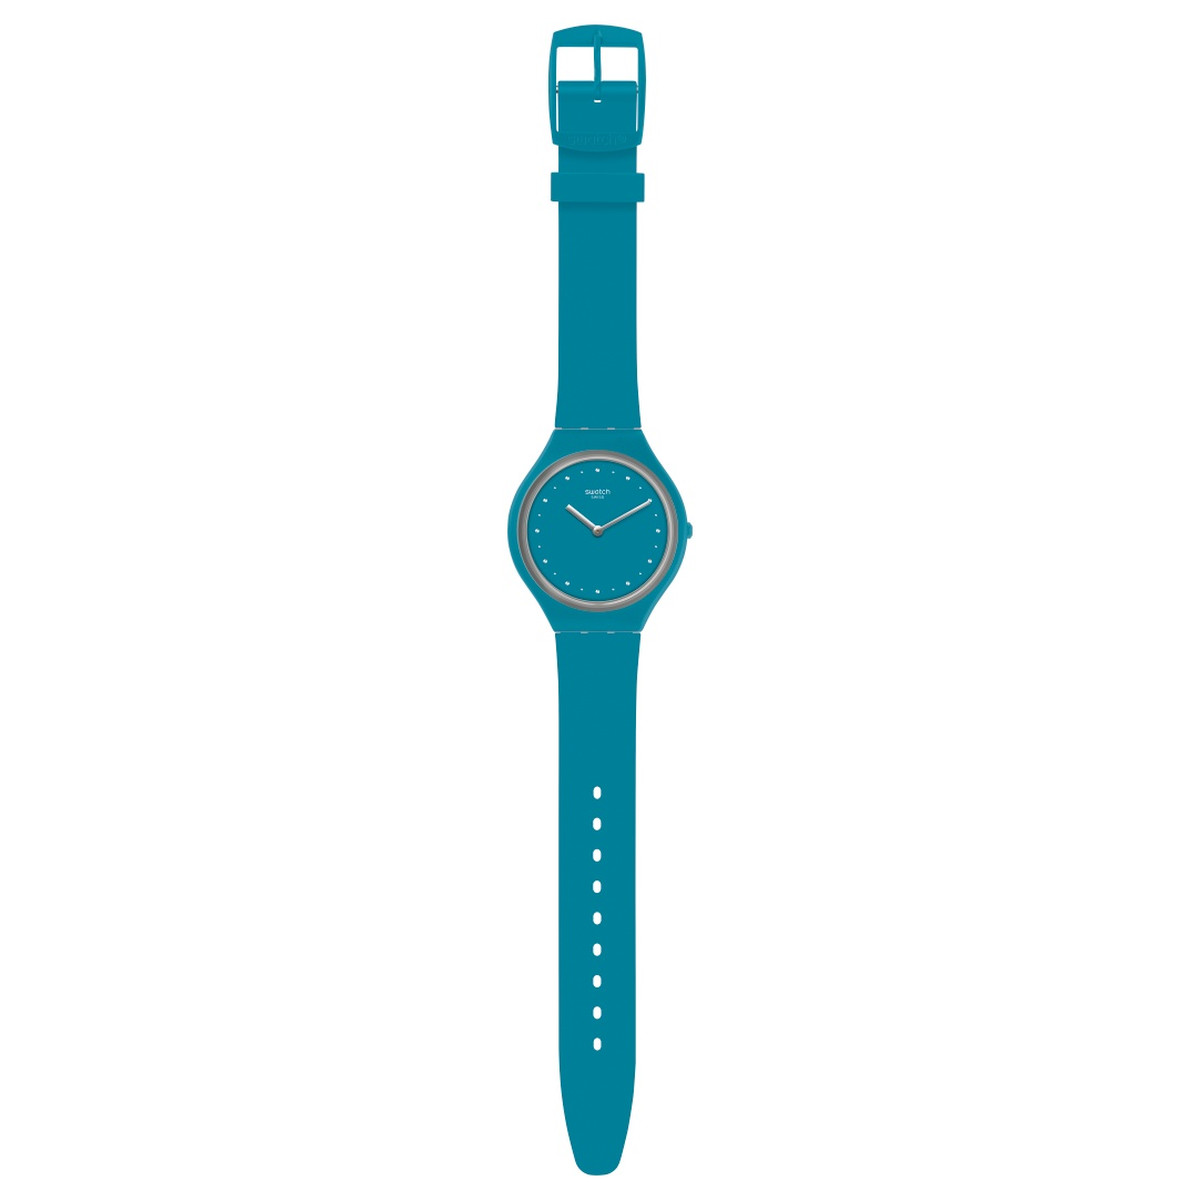 Montre Swatch mixte silicone couleur turquoise - vue D1